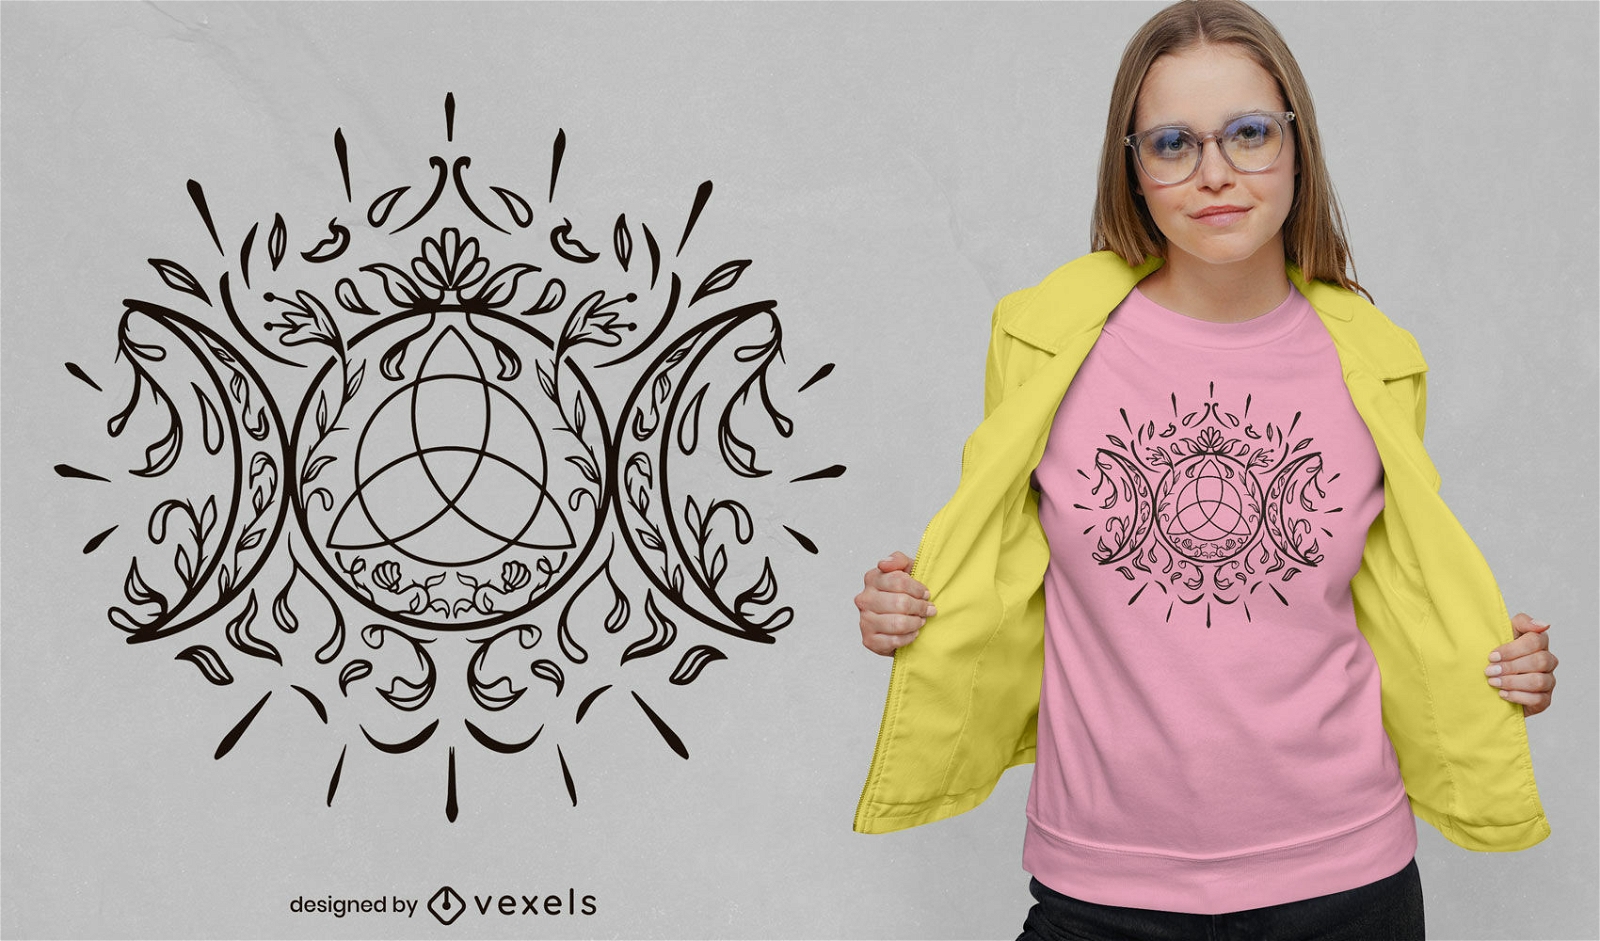 Mystic moon line art t-shirt design